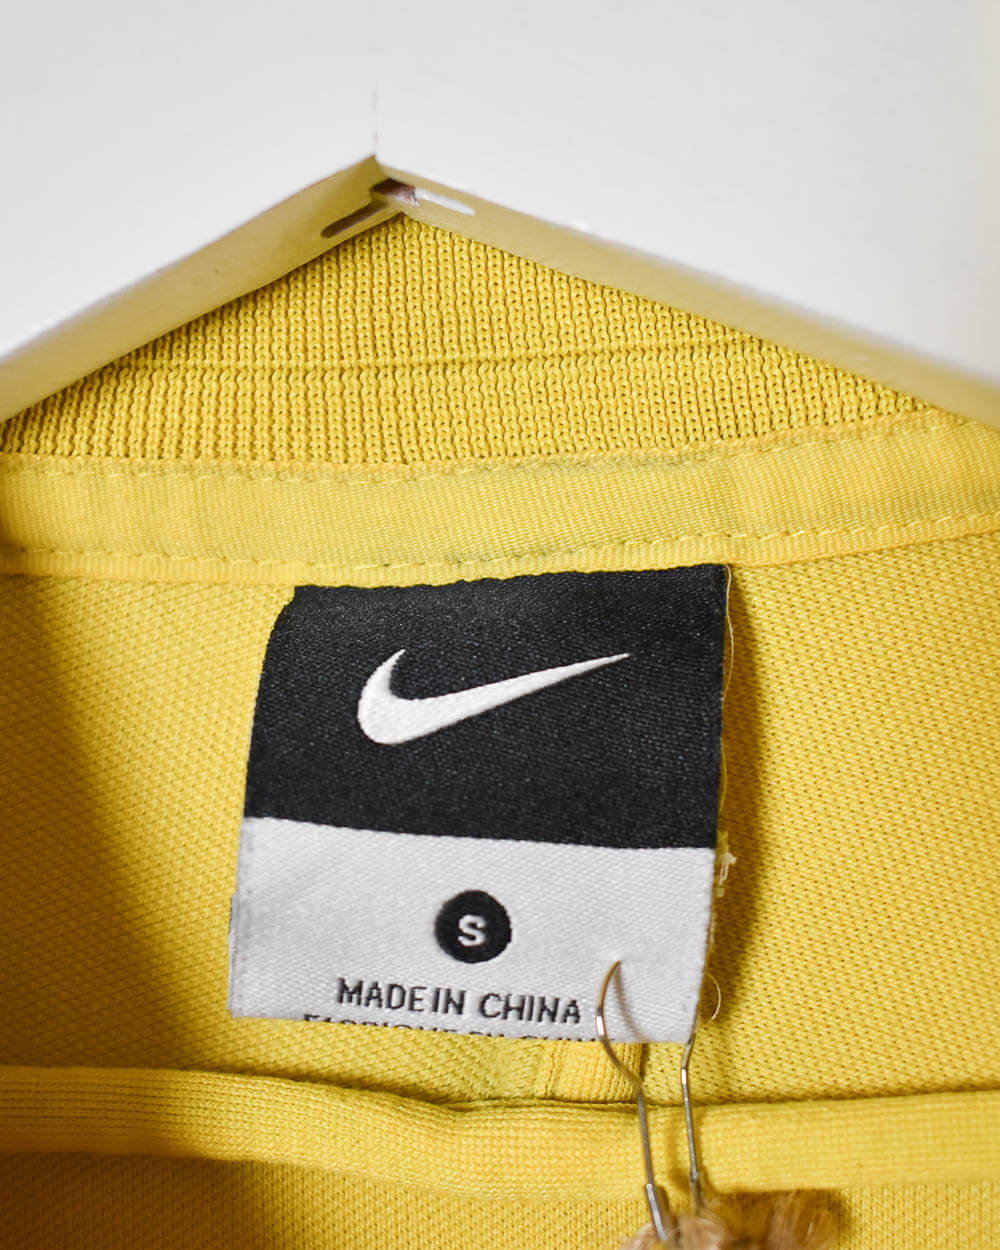 Yellow Nike Brazil Tracksuit Top - Small